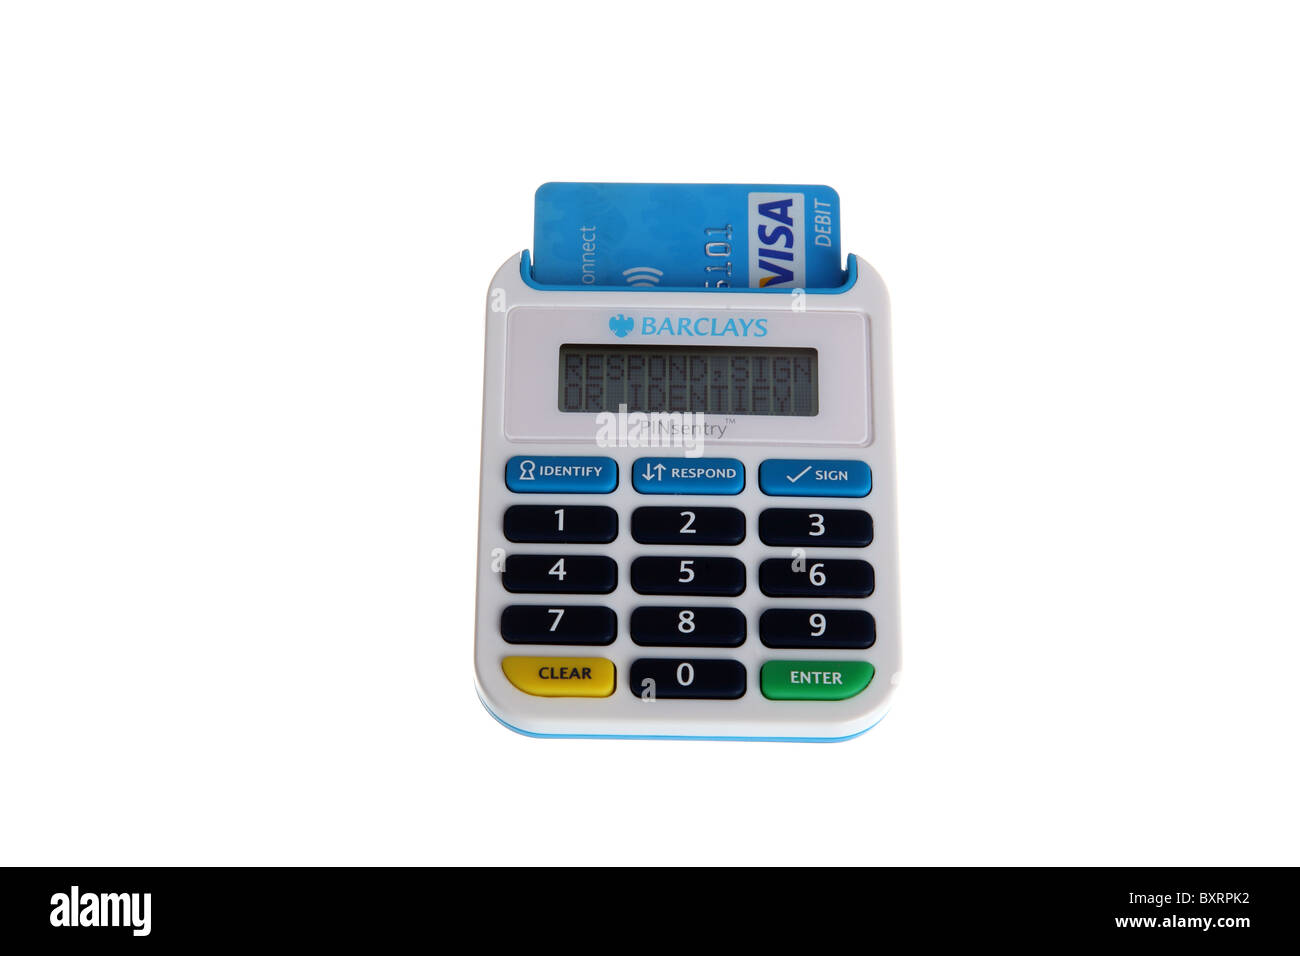 Barclays Bank debit card reader Stock Photo